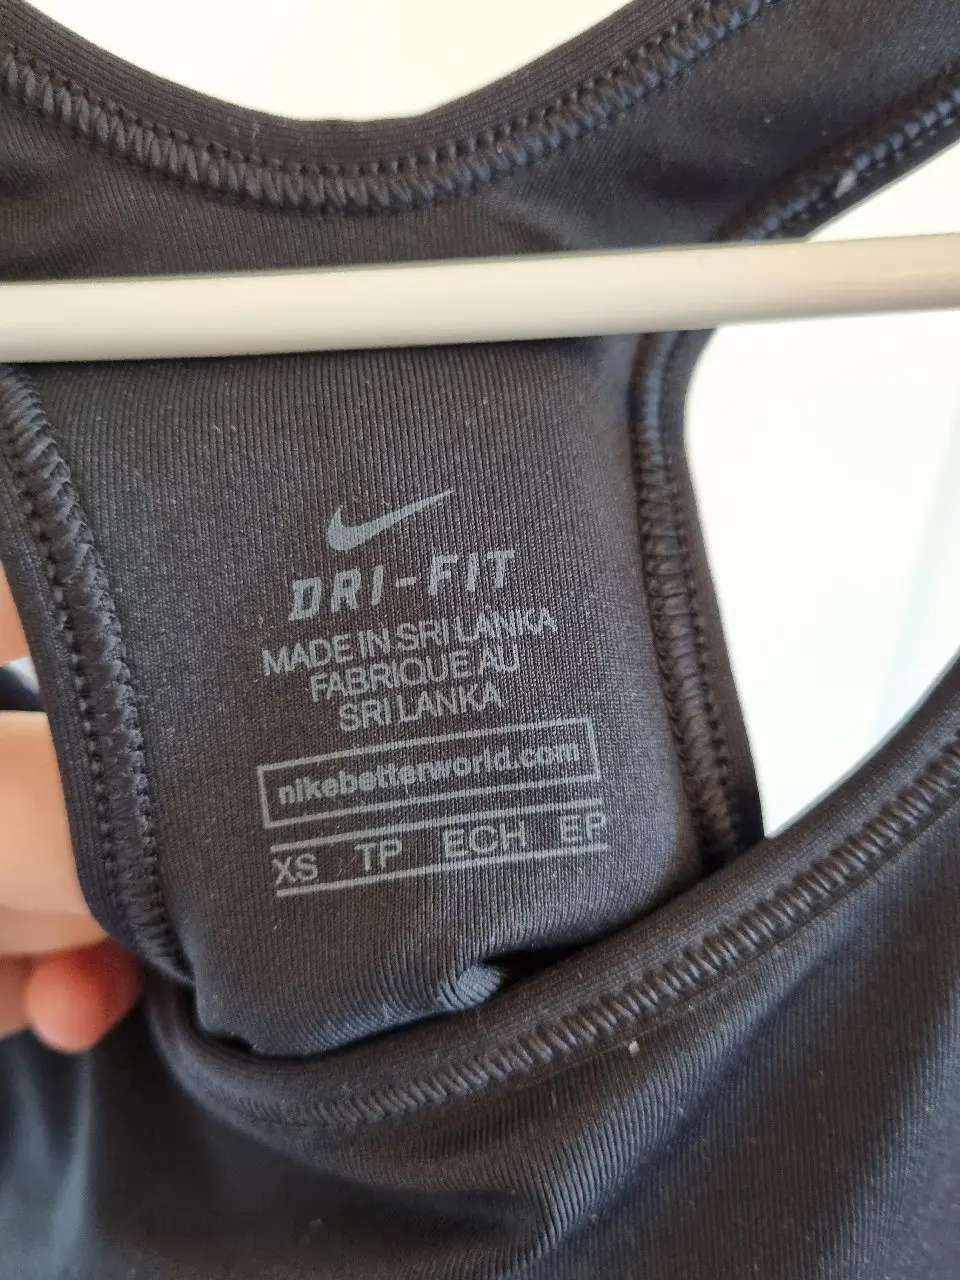 Nike andet sportstøj